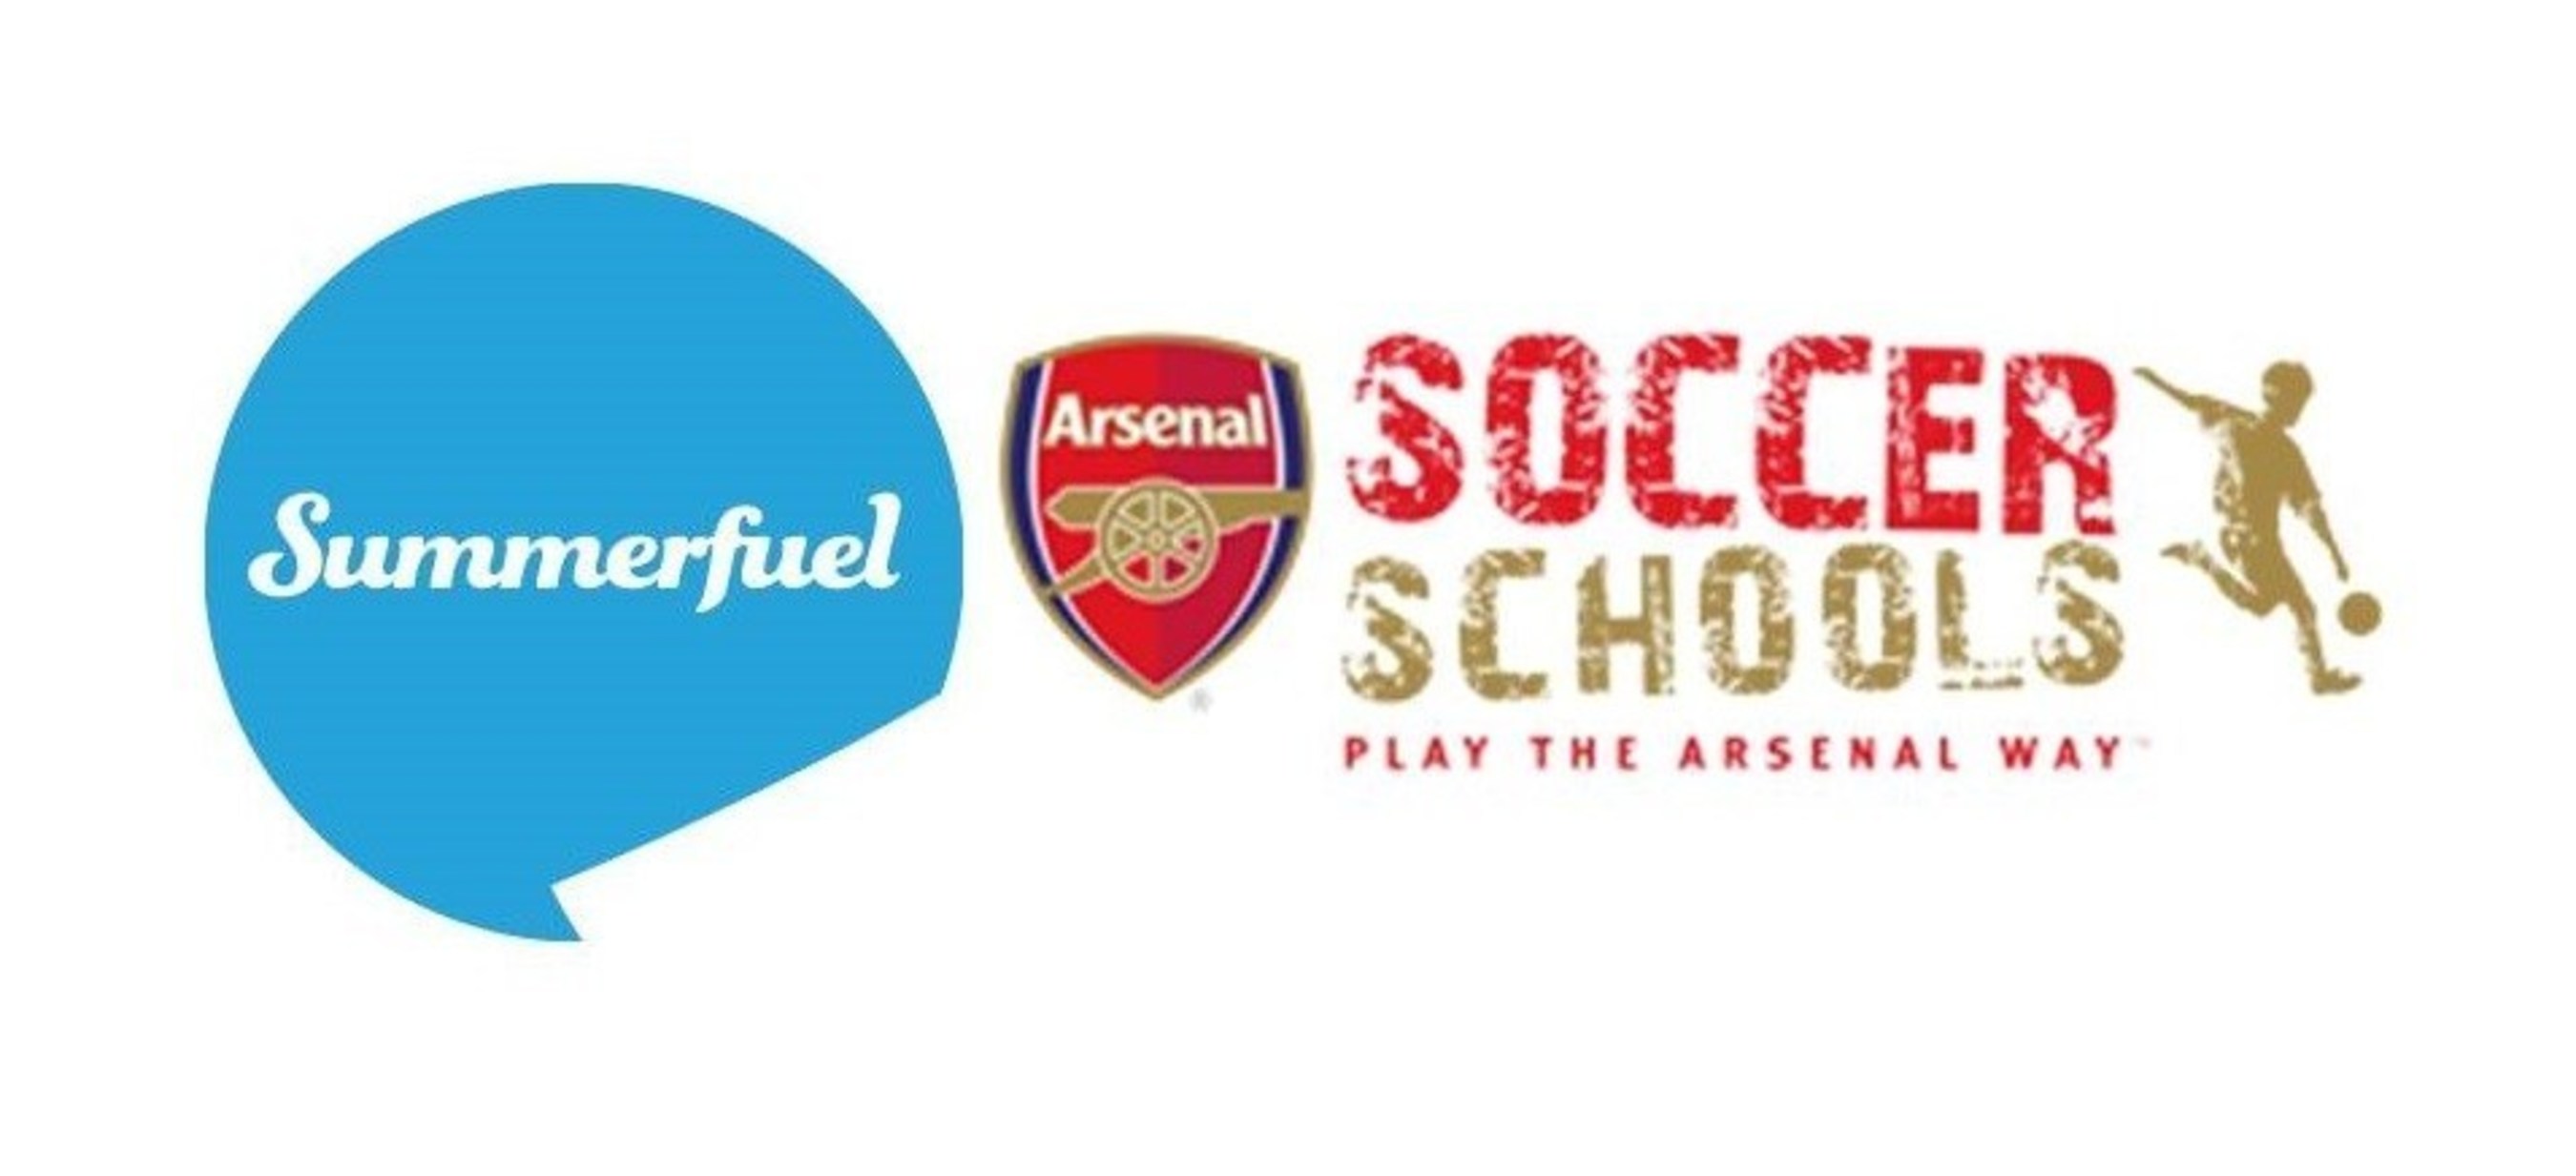 Arsenal Soccer Schools USA and Summerfuel